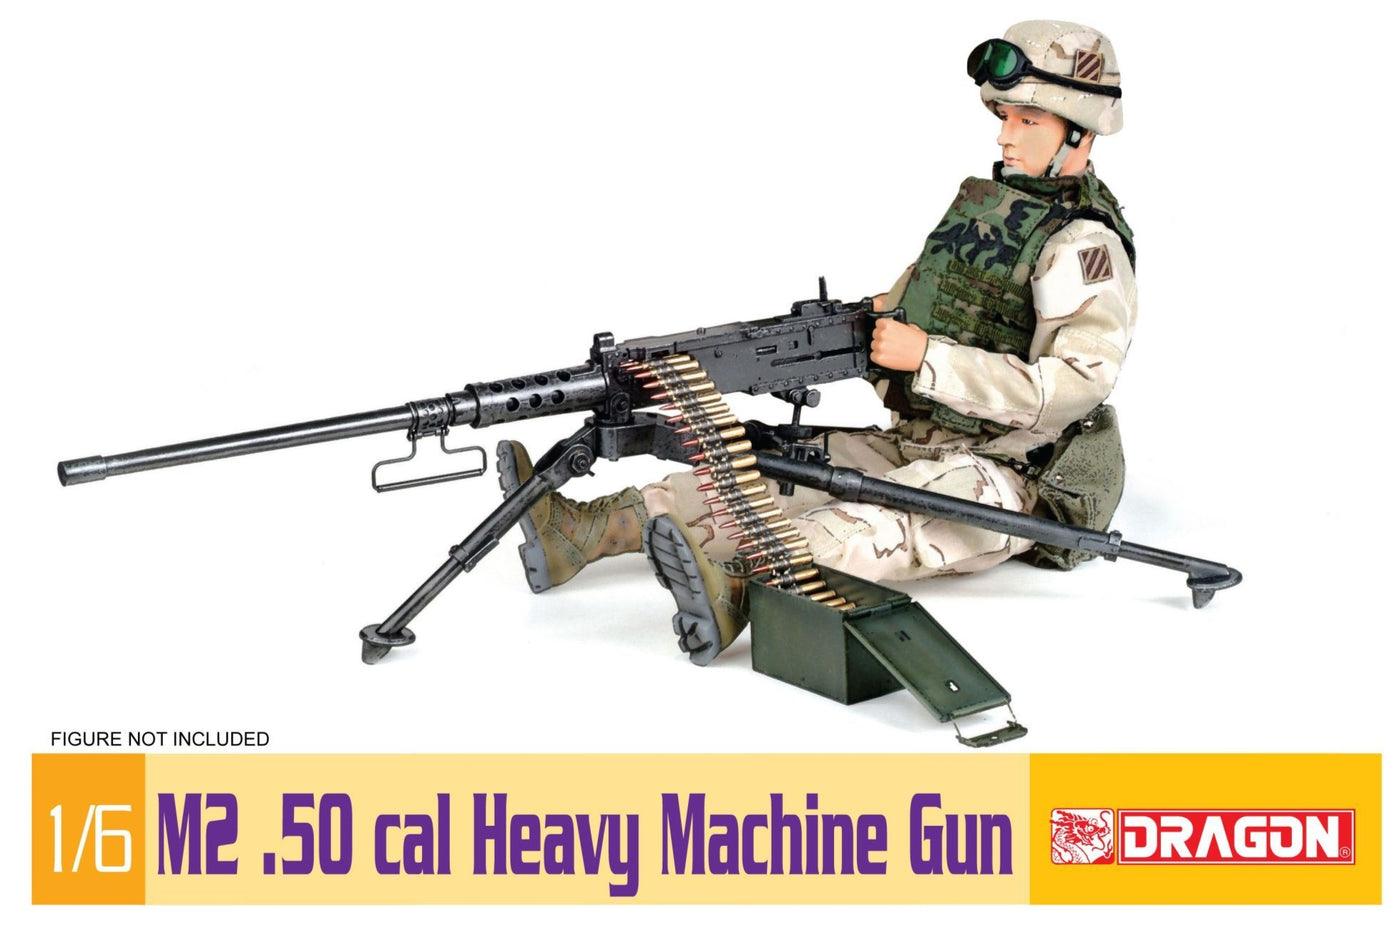 16 M2 50 Cal Heavy Machine Gun Cyber Hobby